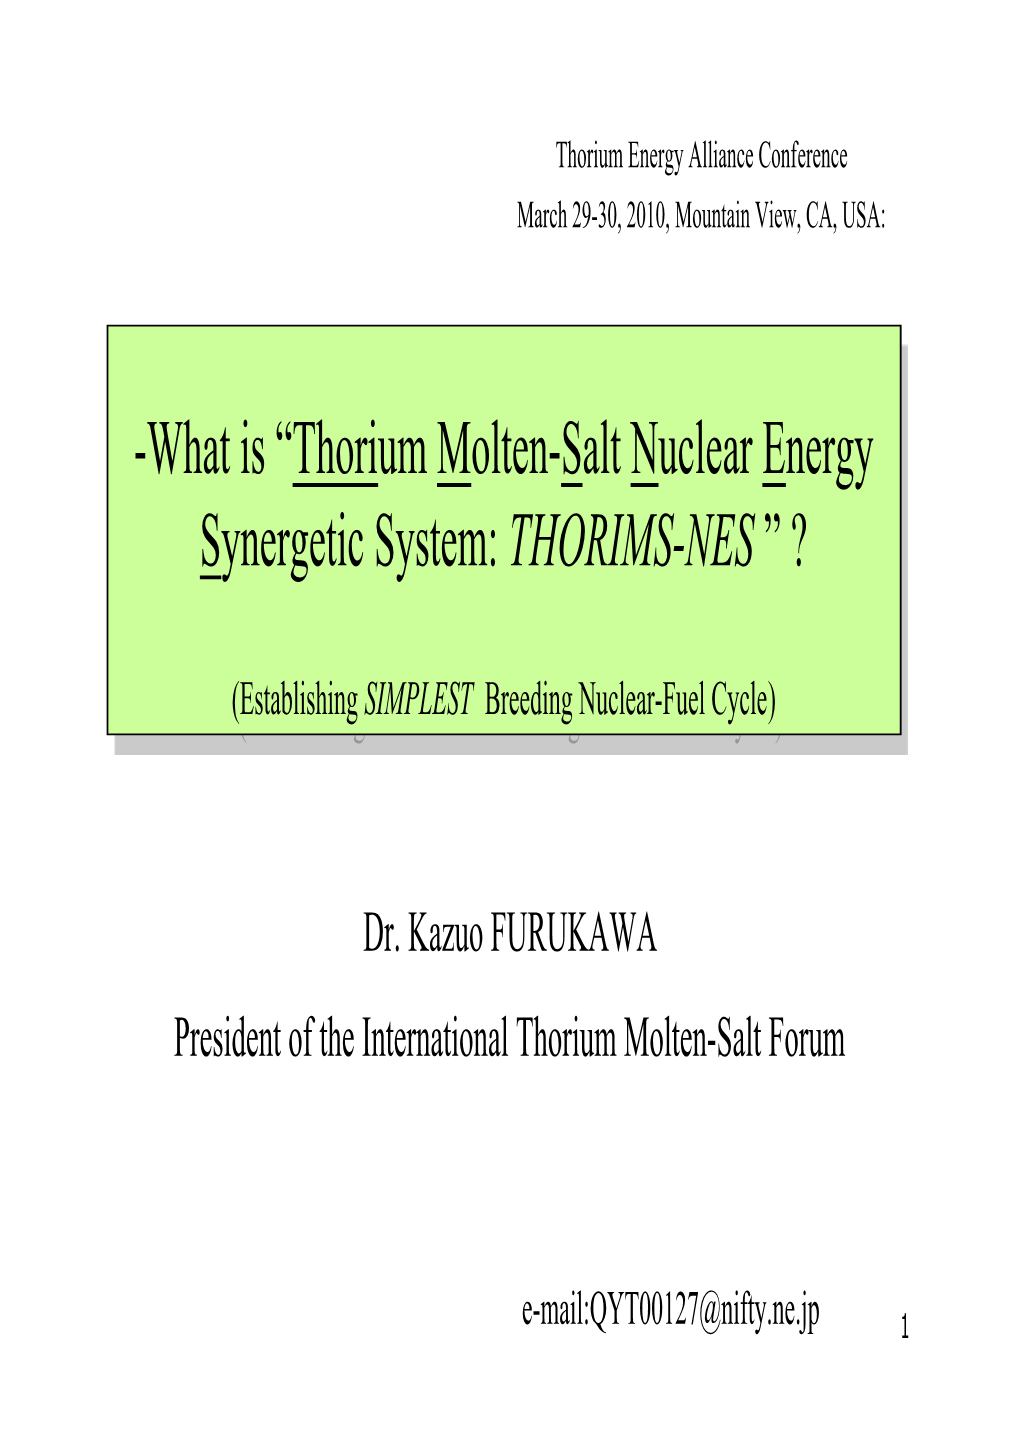 Thorium Molten-Salt Nuclear Energy Synergetic System: THORIMS-NES